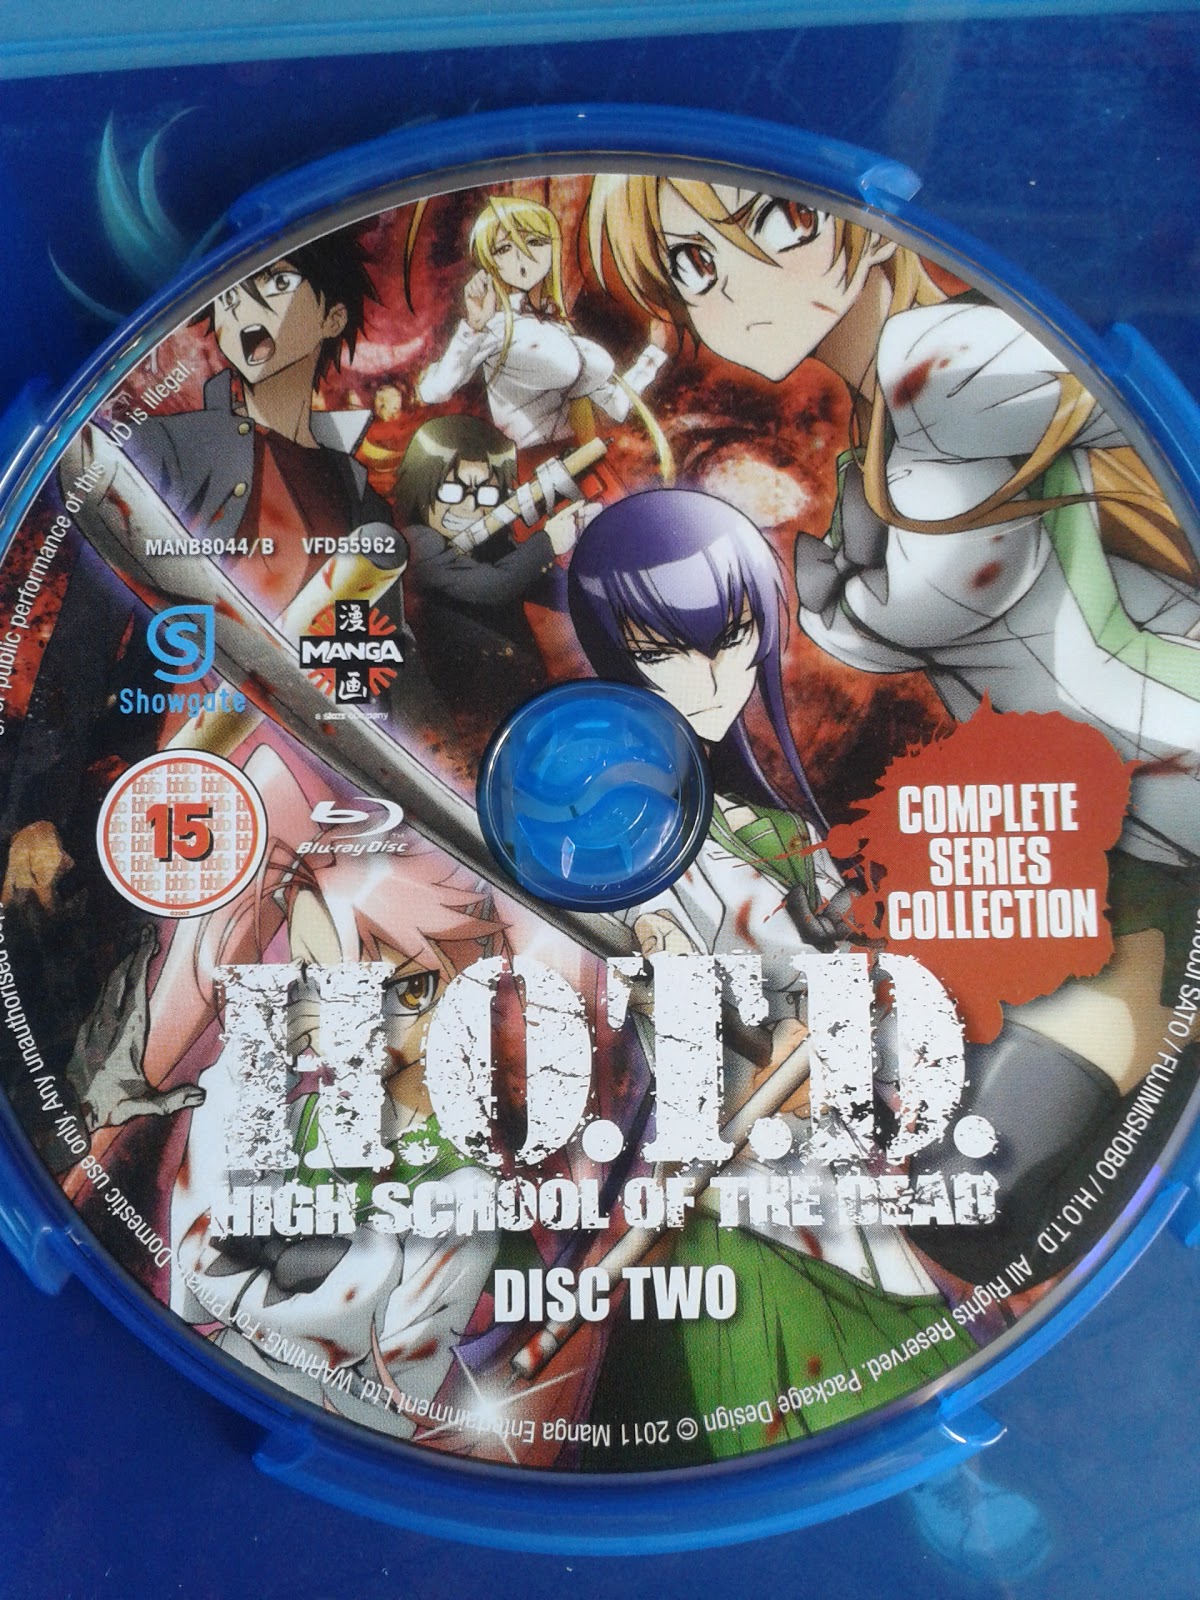 High School of the Dead: Drifters Of The Dead Edition (Series & OVA) (DVD)